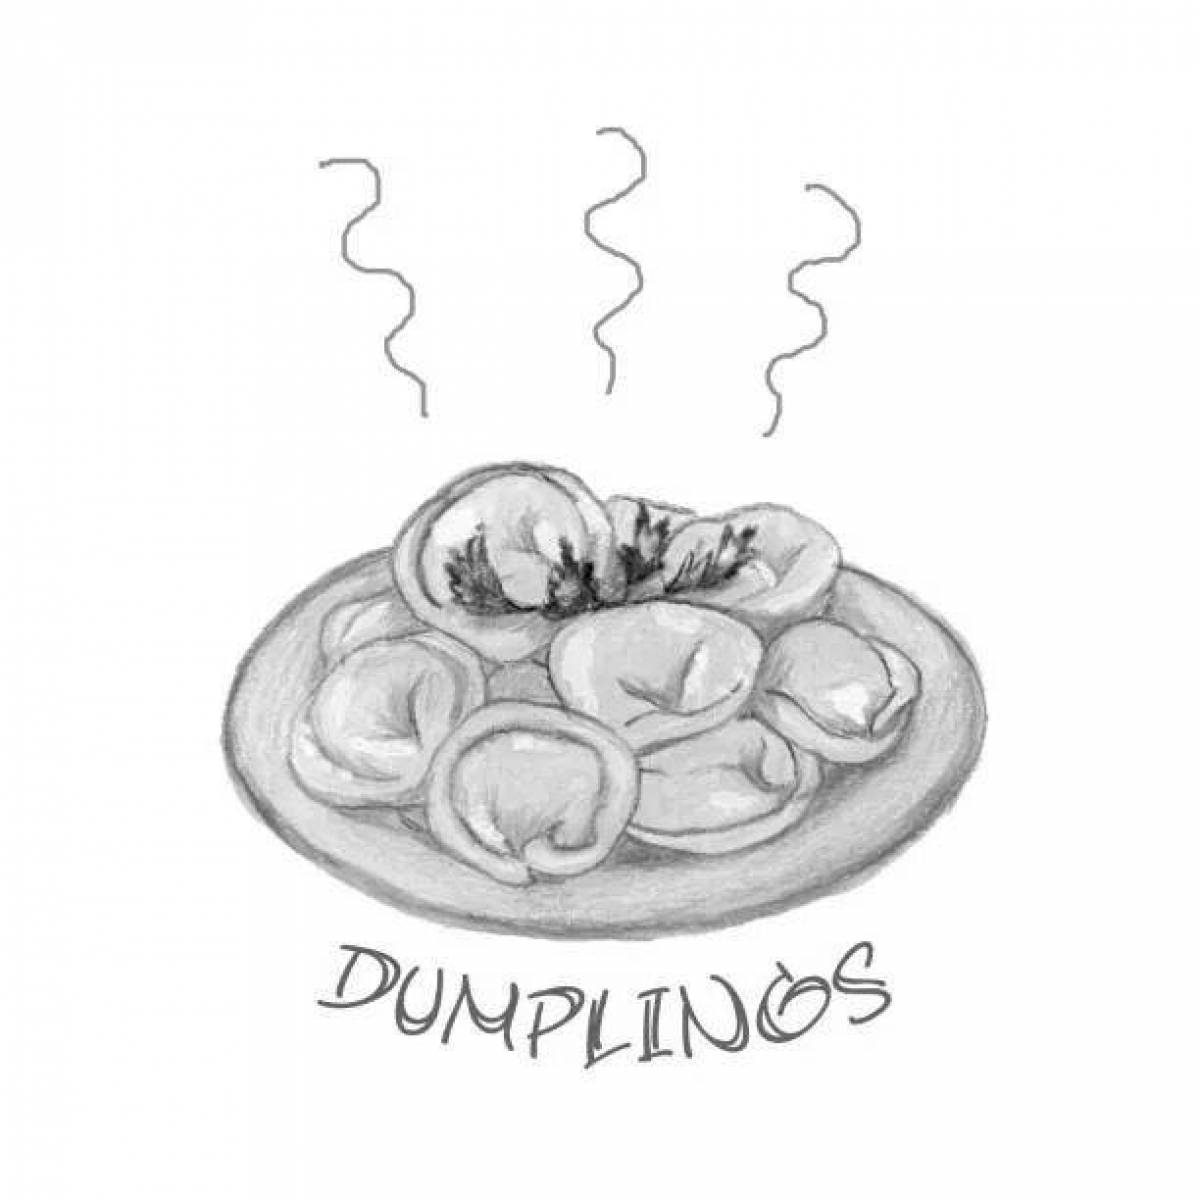 Attractive dumplings in a bowl